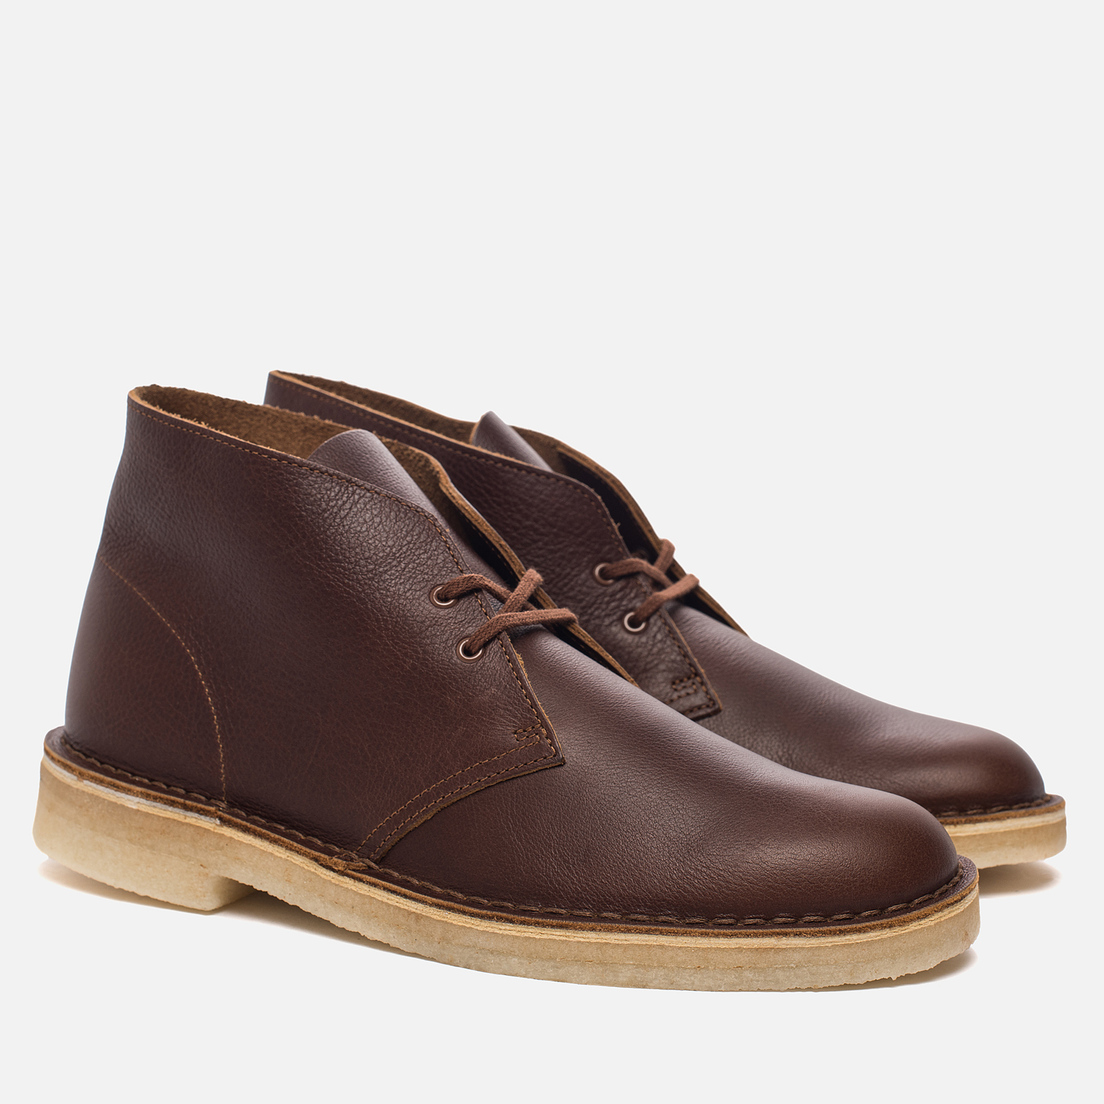 clarks desert boot tan tumbled leather